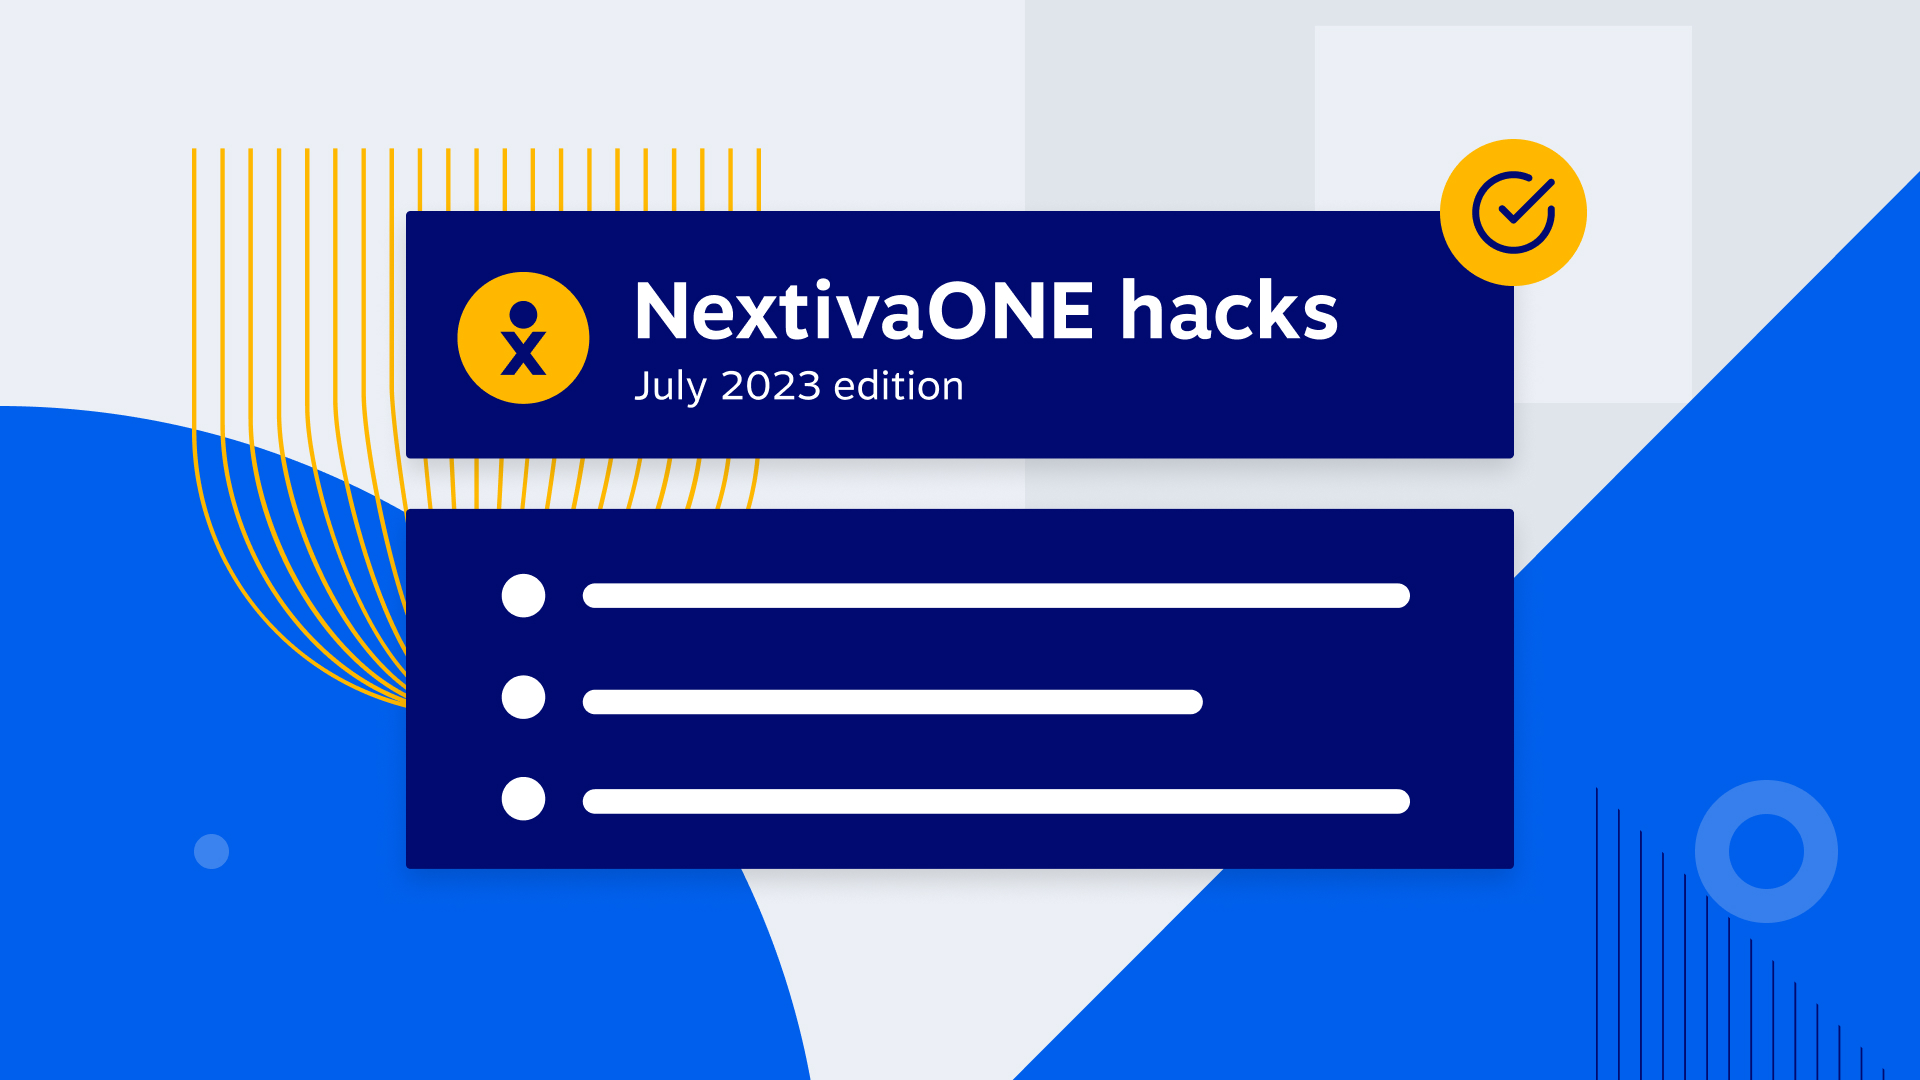 NextivaONE hacks. July 2023 edition